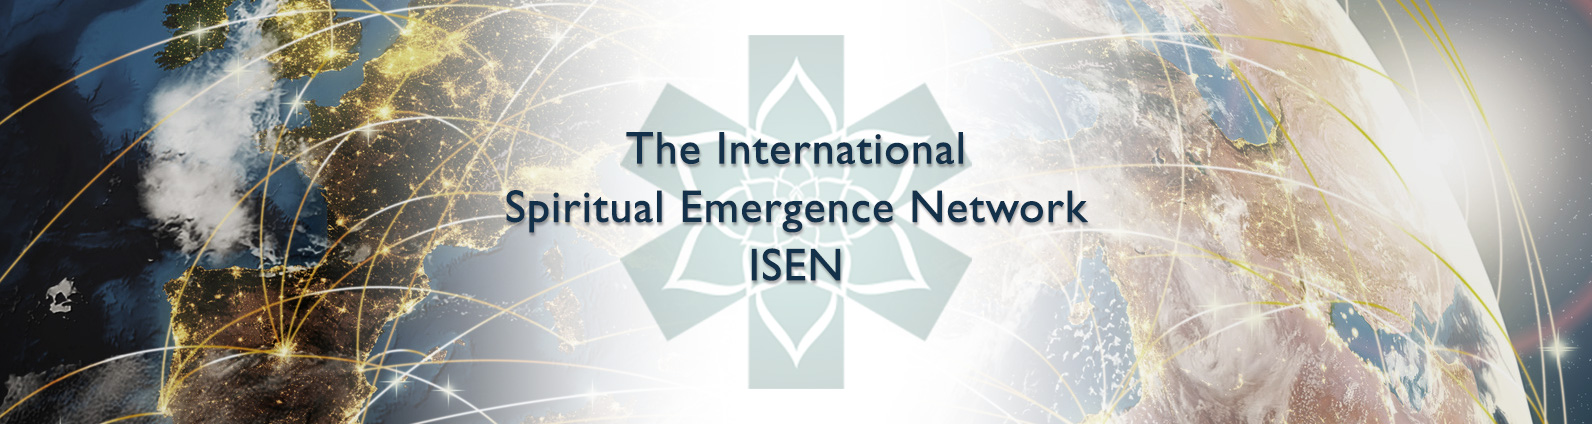 The International Spiritual Emergence Network